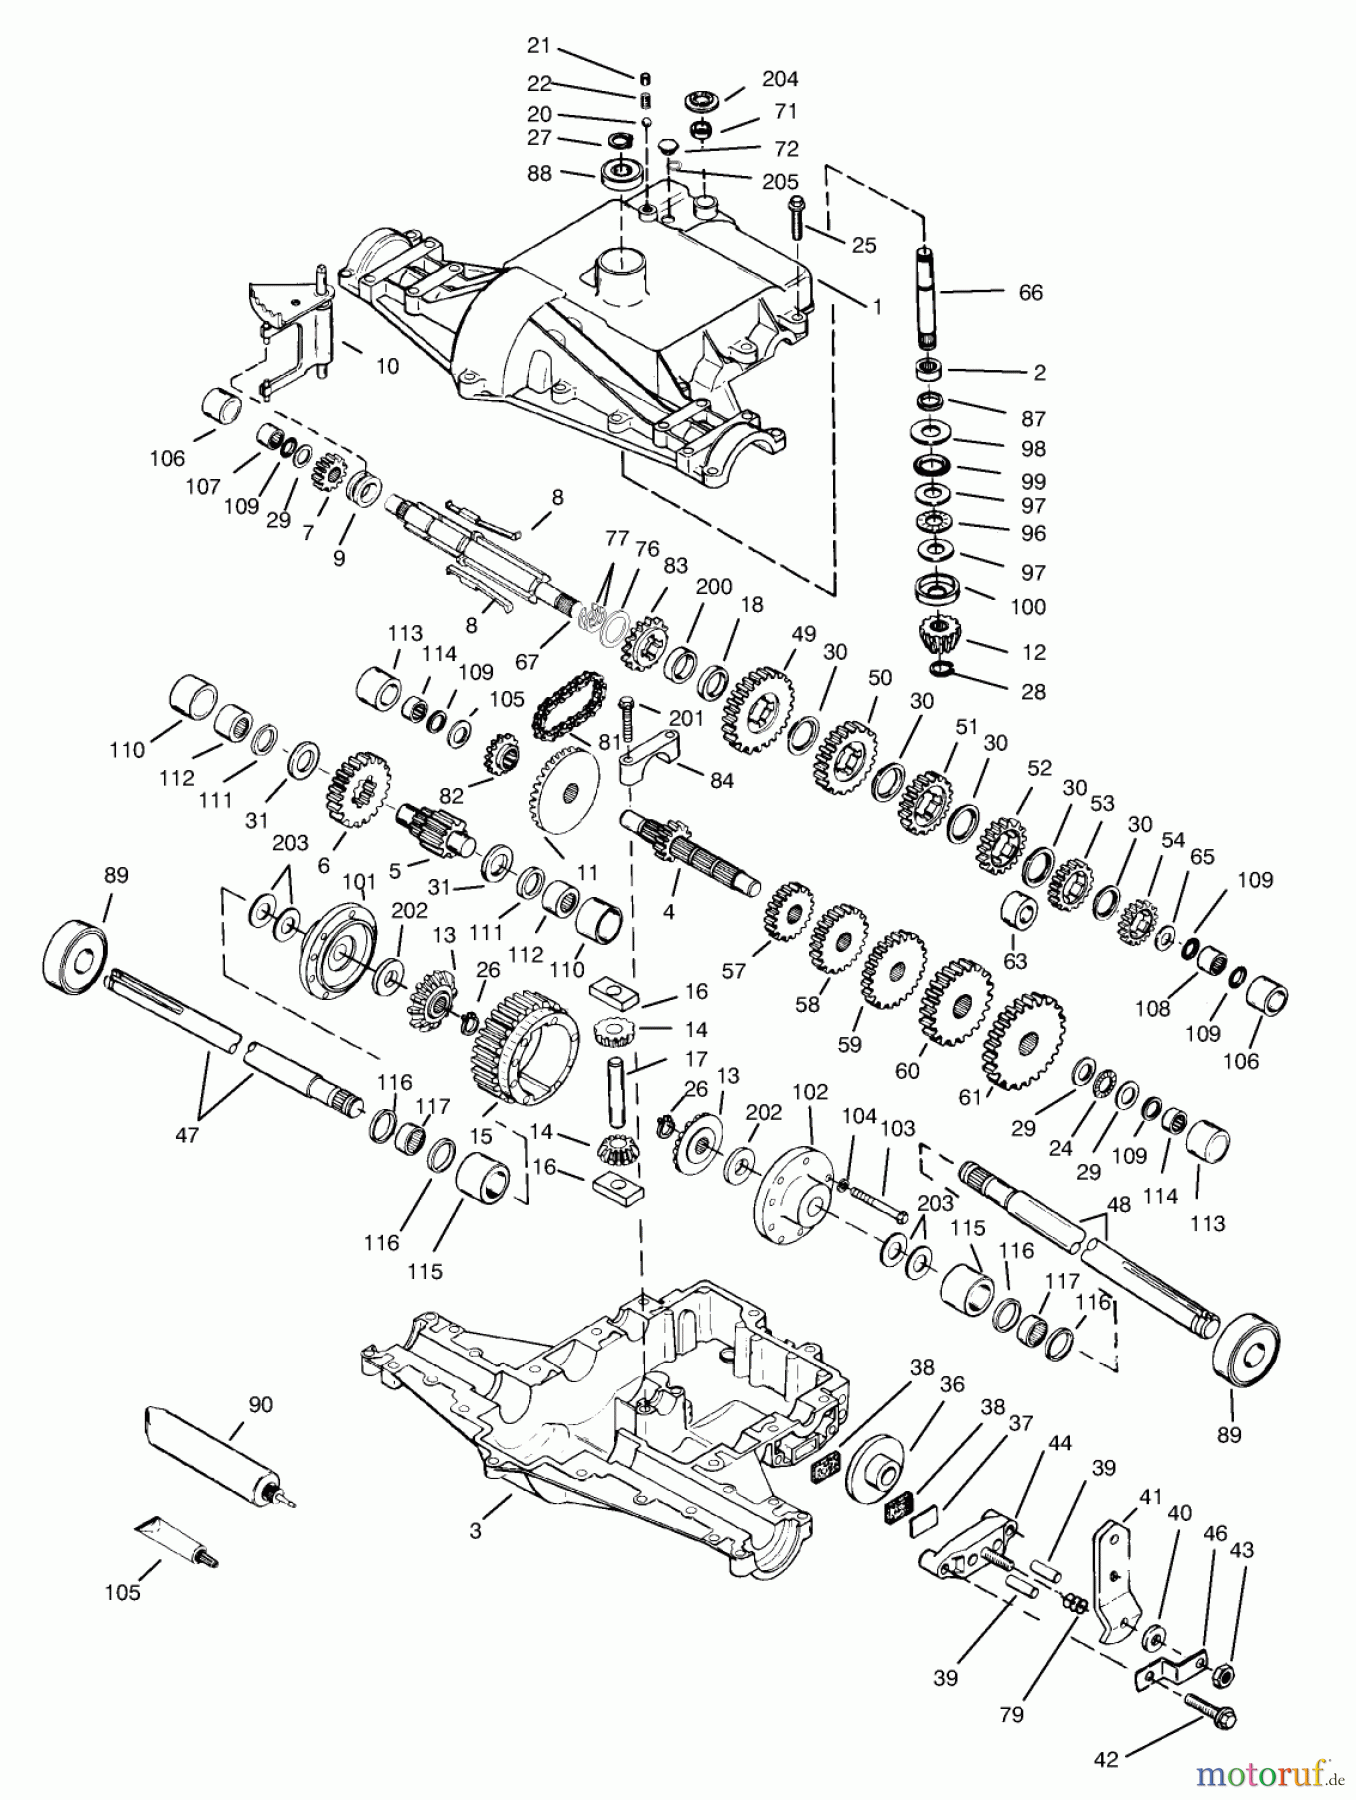  Toro Neu Mowers, Lawn & Garden Tractor Seite 1 72045 (265-6) - Toro 265-6 Lawn and Garden Tractor, 1998 (8900001-8900399) PEERLESS TRANSAXLE 820-024/820-024A